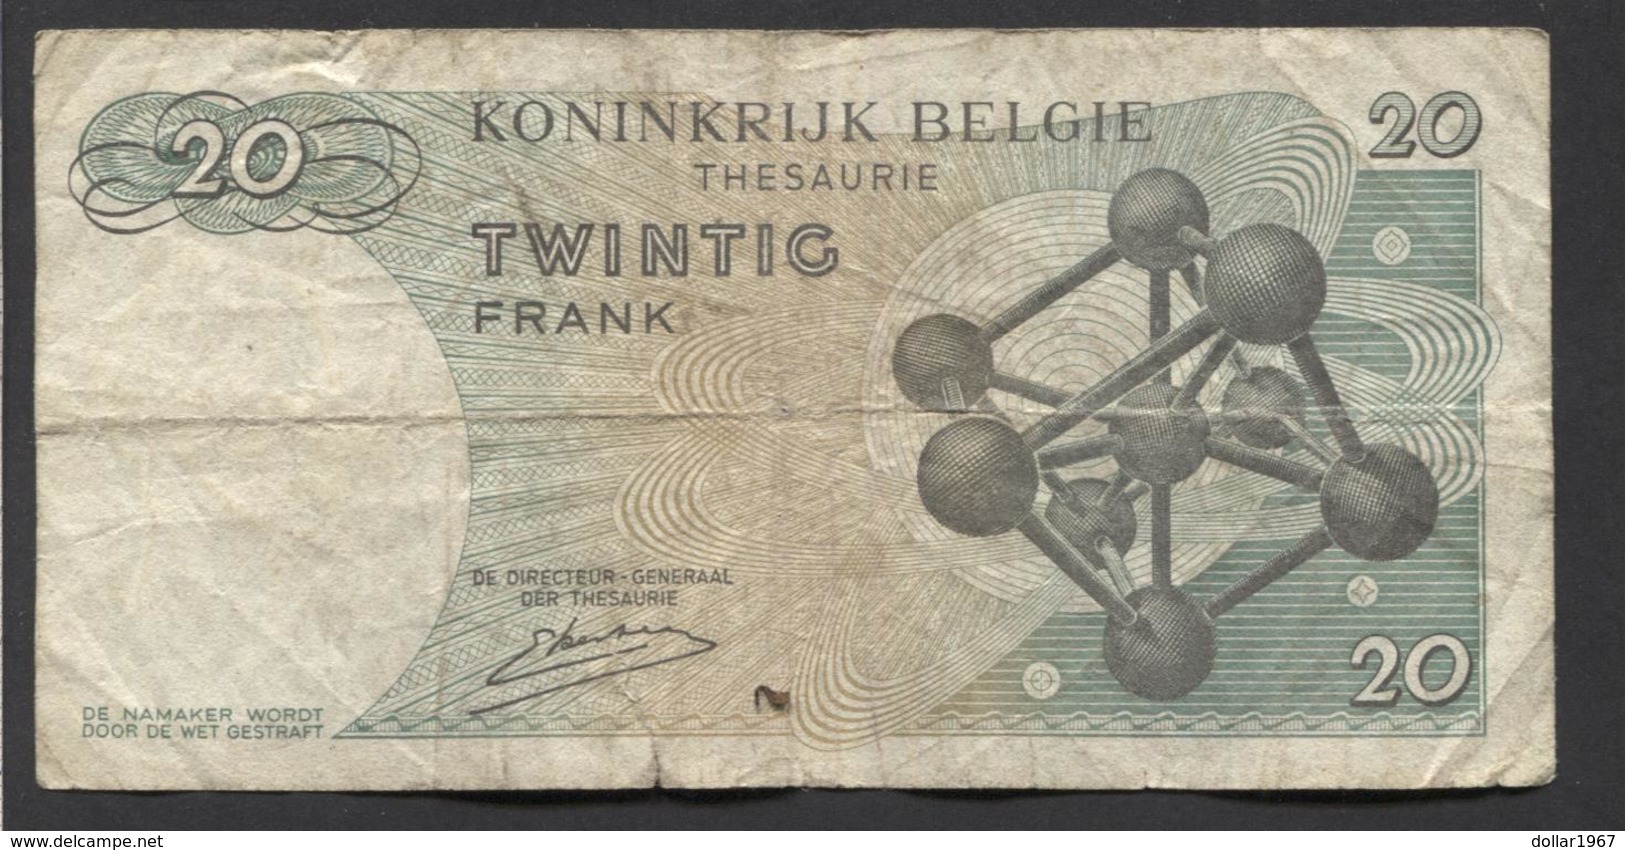 België Belgique Belgium 15 06 1964 -  20 Francs Atomium Baudouin. 4 B 1133746 - 20 Francs